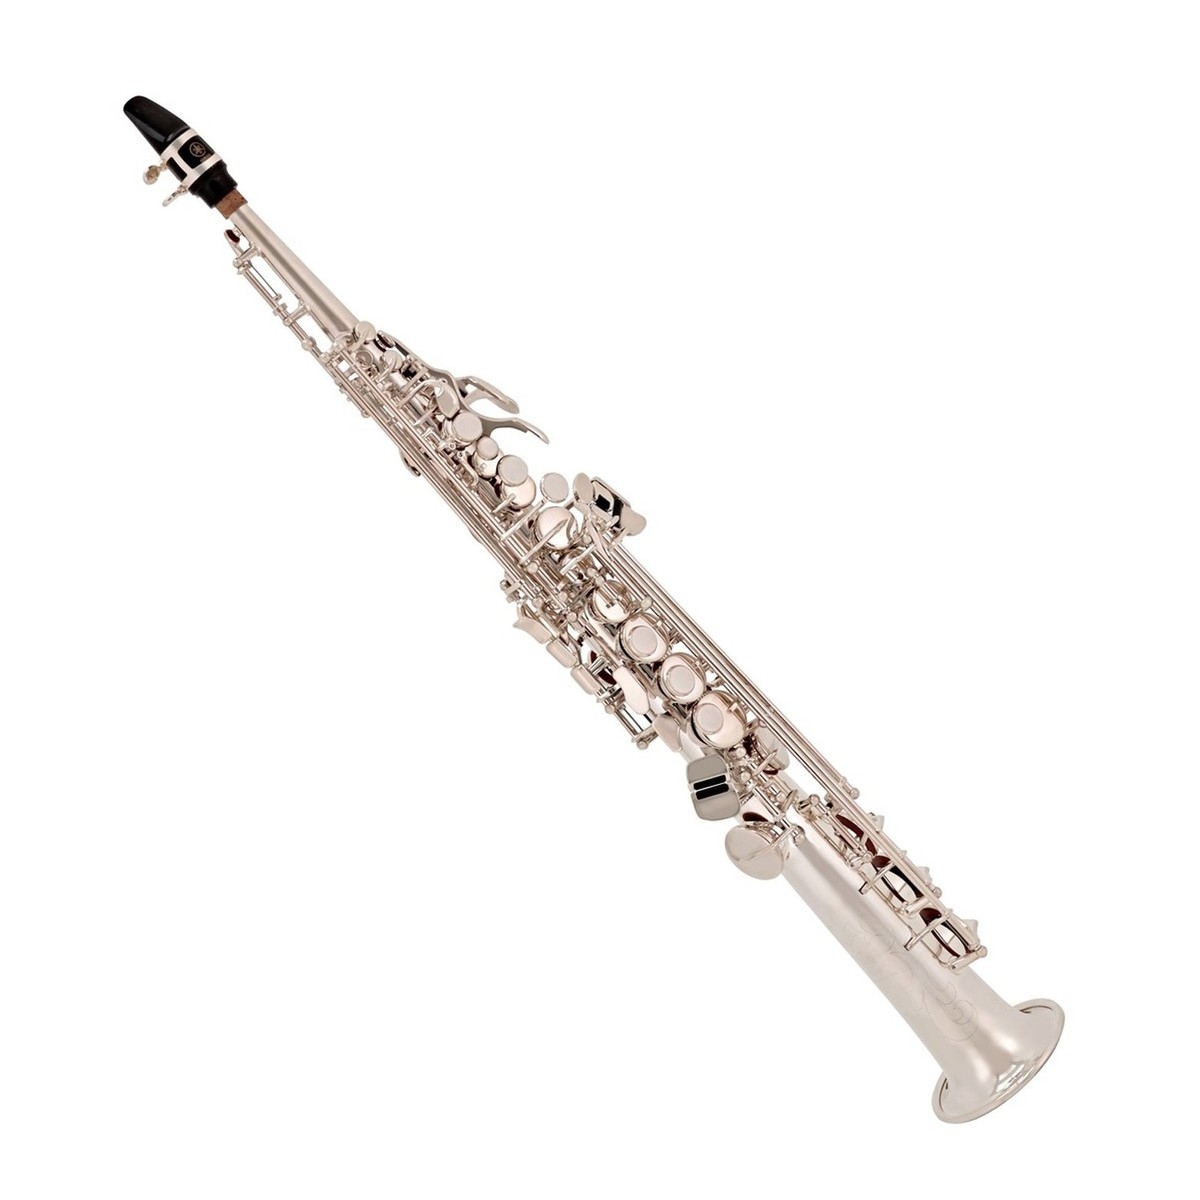 Yamaha YSS-475SII argenté - Saxophone Soprano Intermédiaire